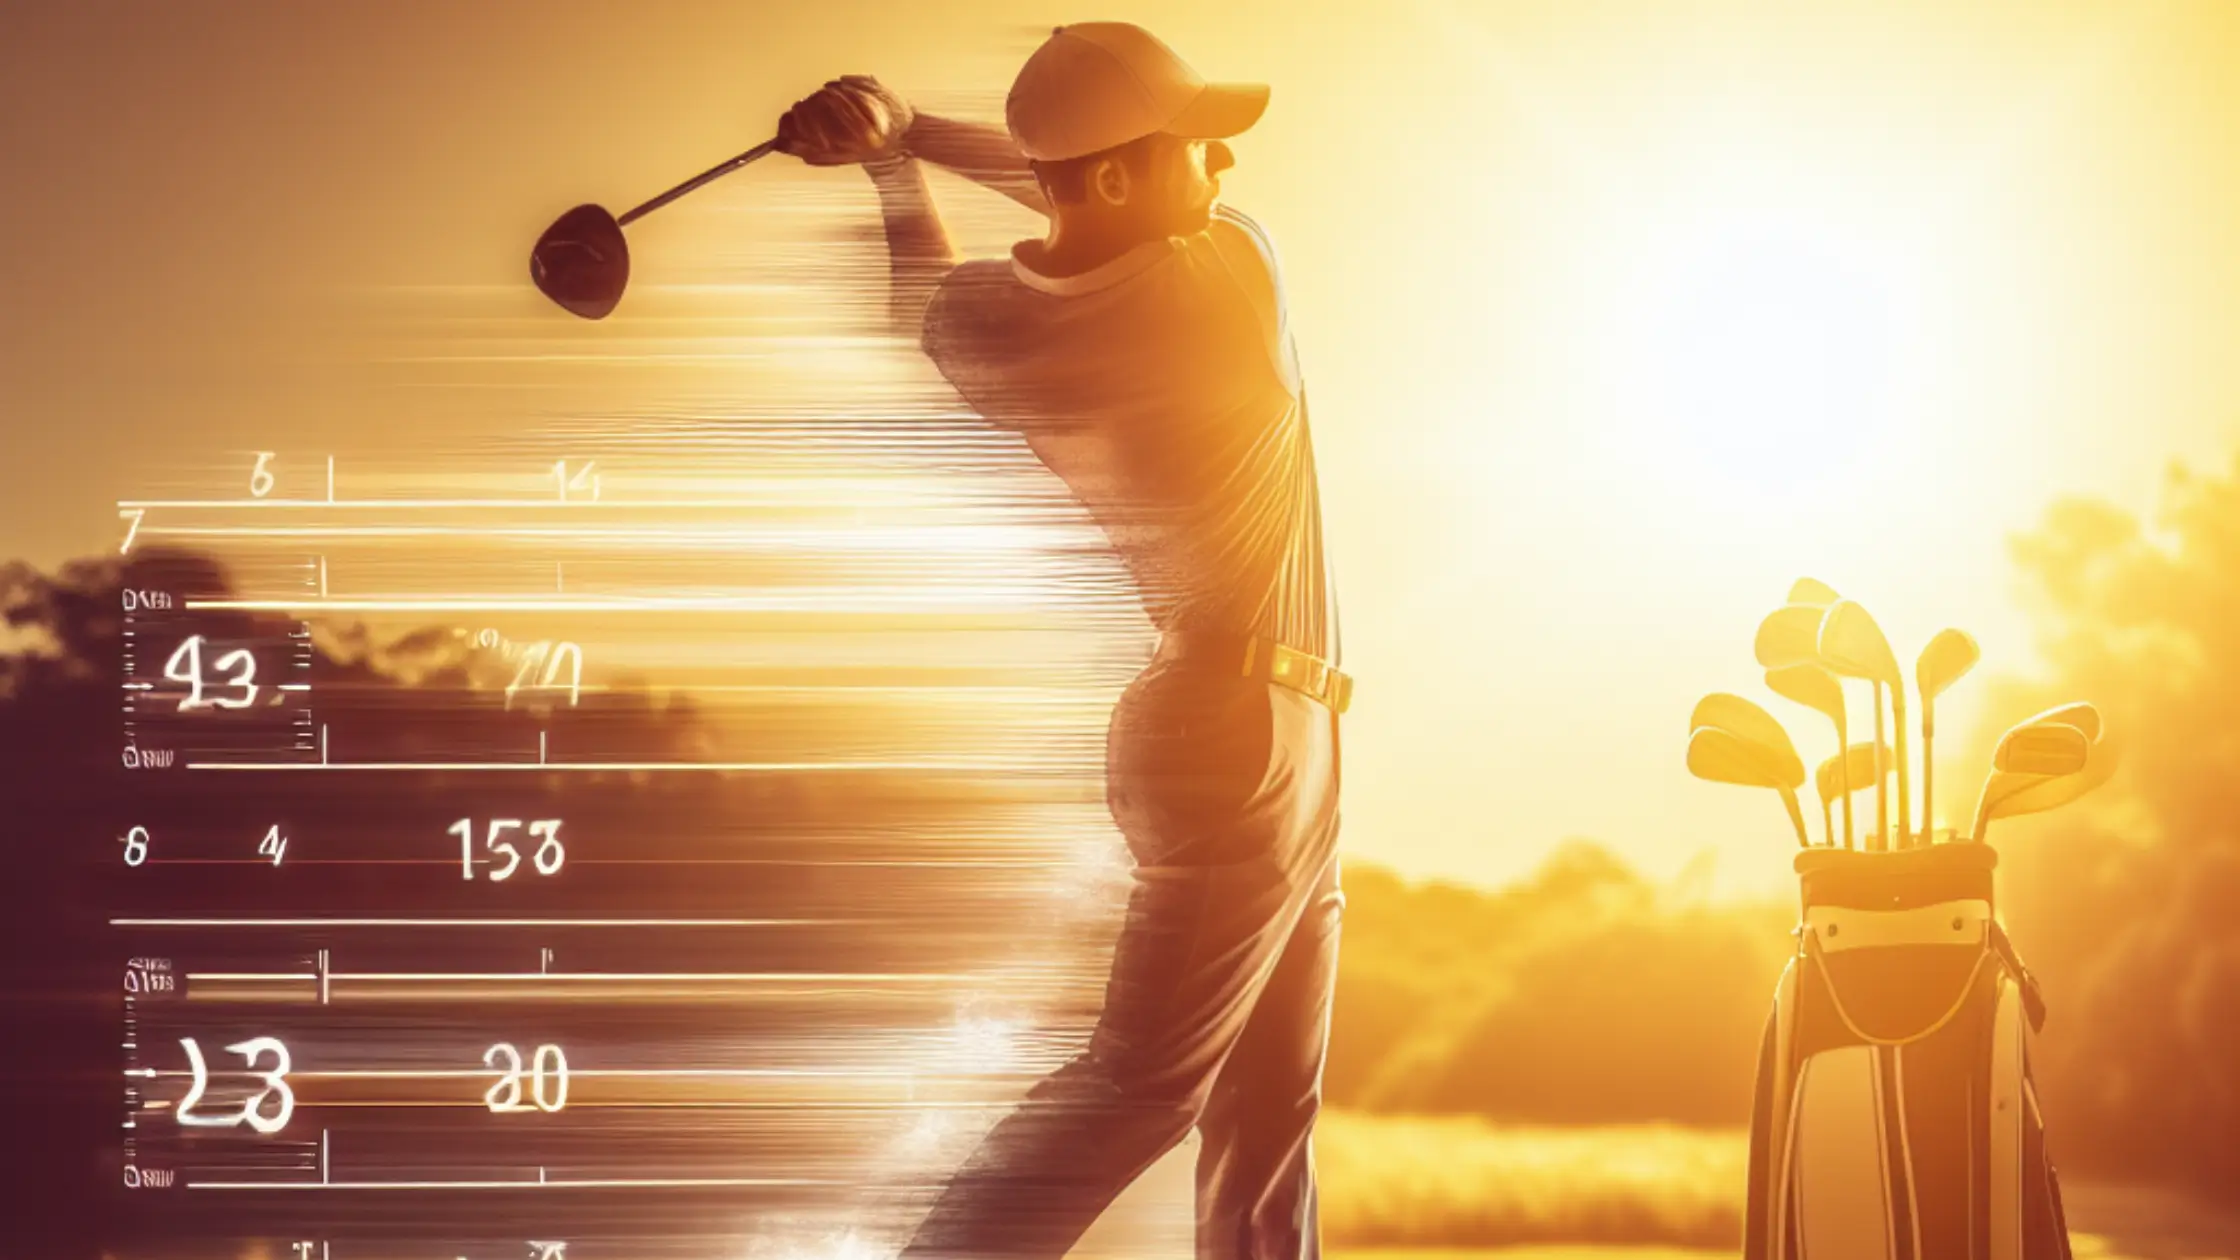 Average Golf Swing Speed